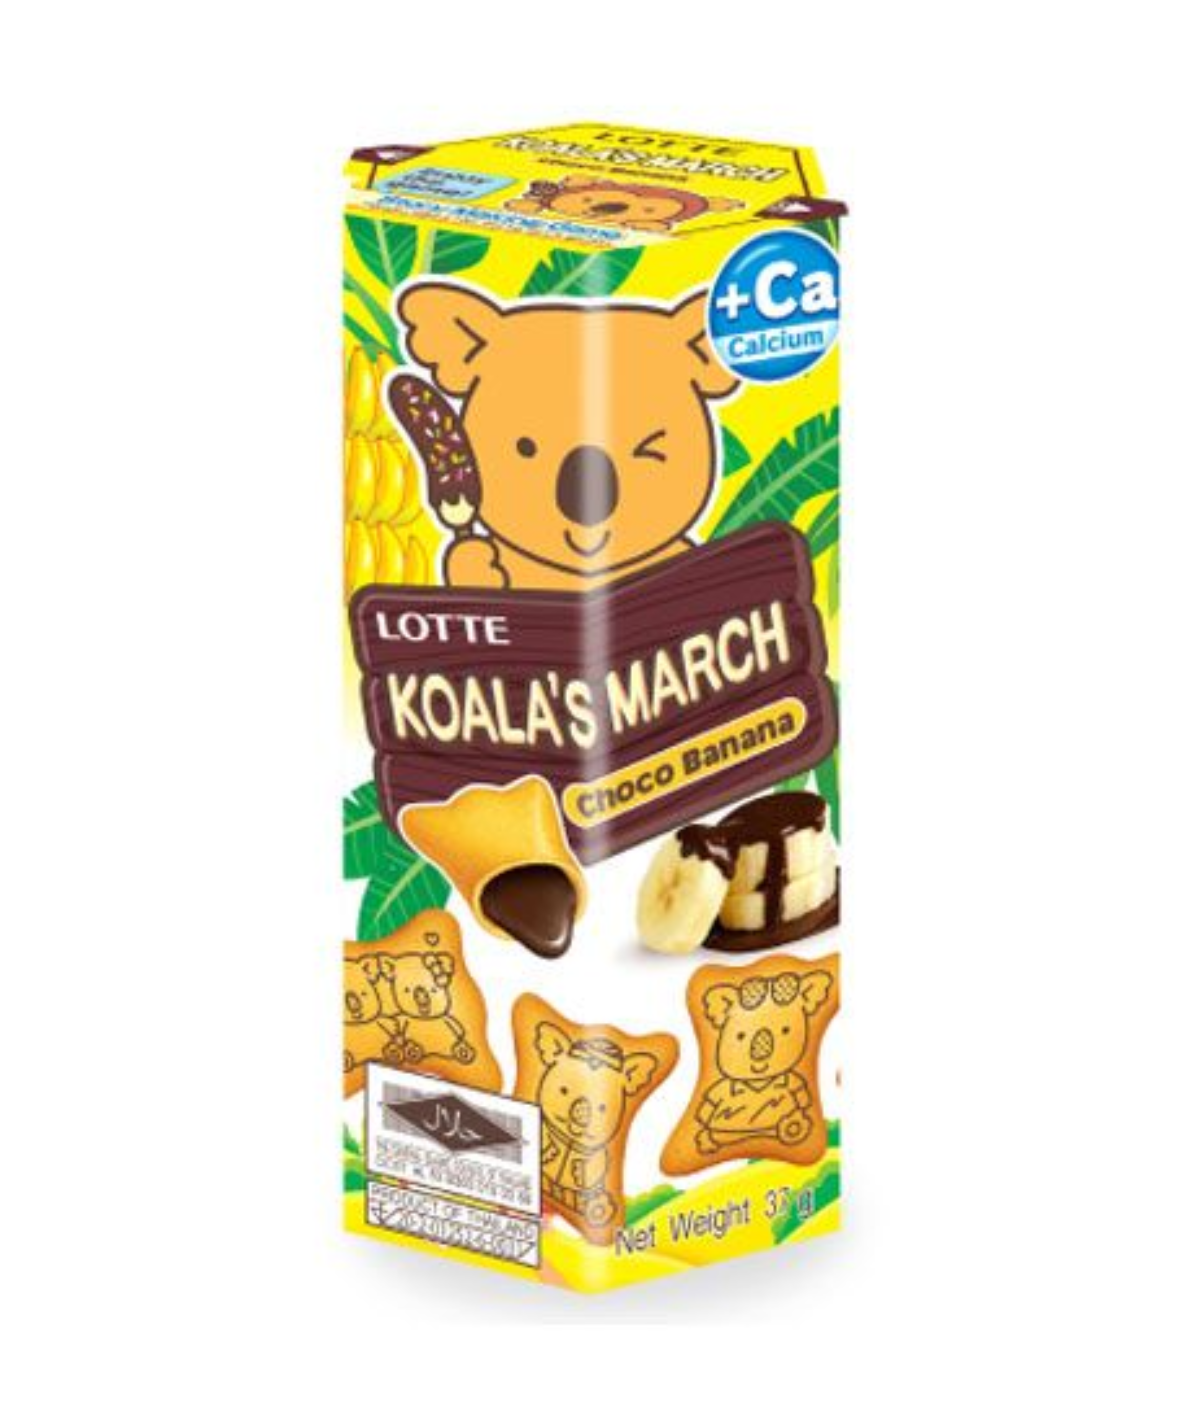 Lotte Koala cookies chocolate banana flavor